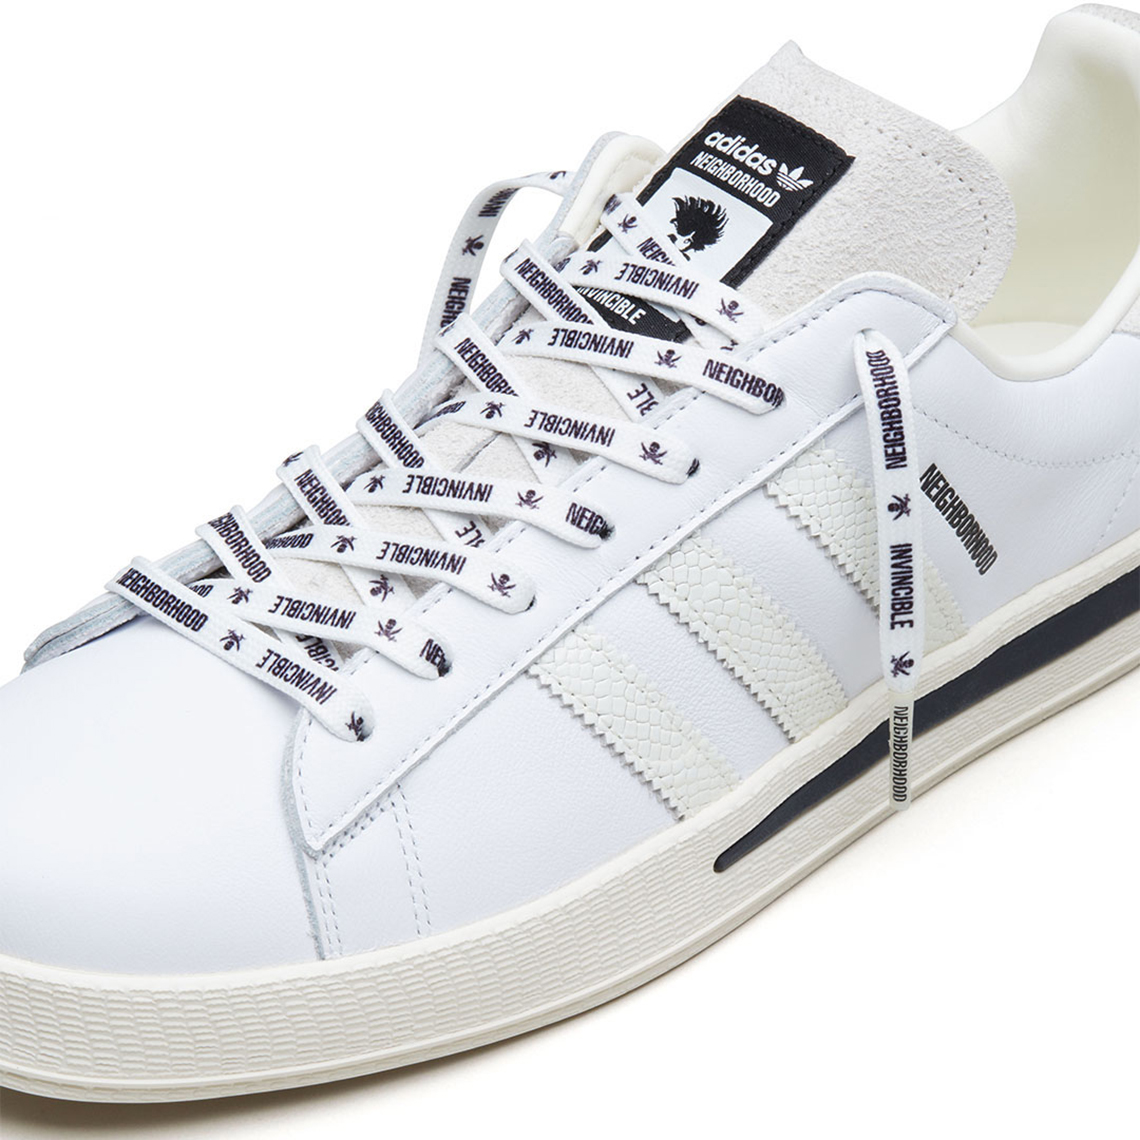 INVINCIBLE NEIGHBORHOOD adidas Campus White Release Date | SneakerNews.com